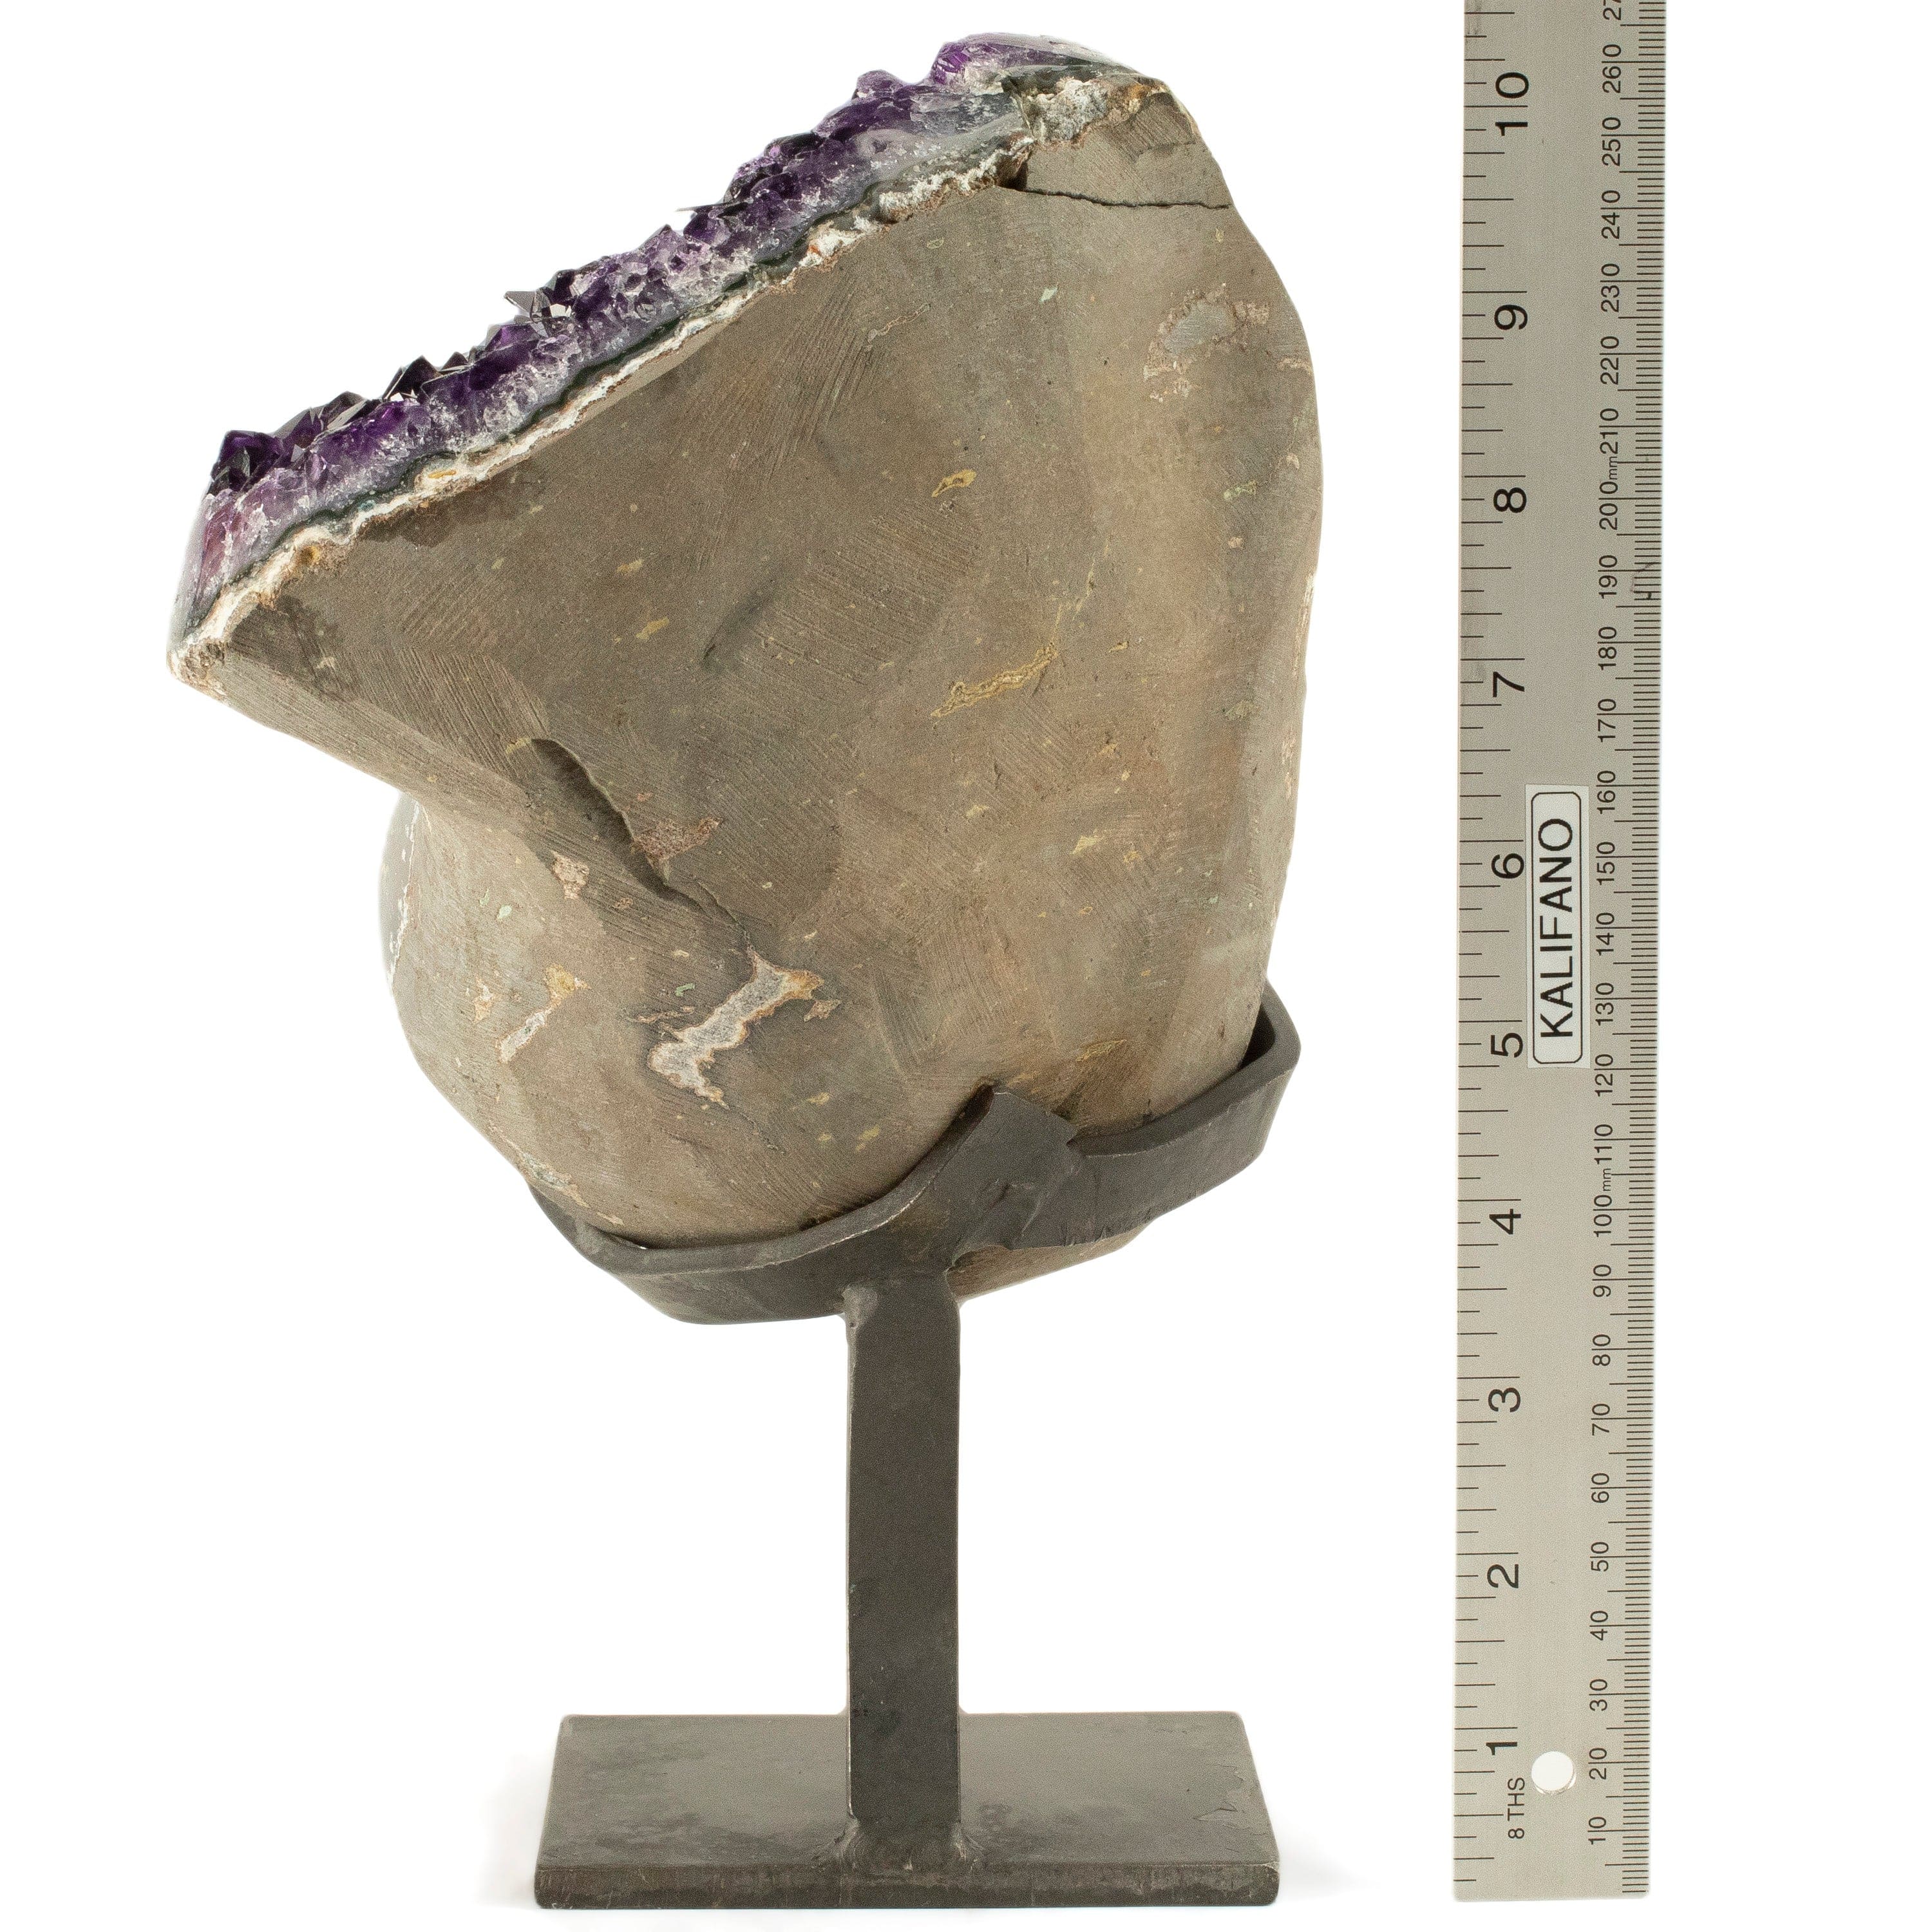 Kalifano Amethyst Uruguayan Amethyst Geode on Custom Stand - 8.6 lbs / 10 in. UAG4000.002